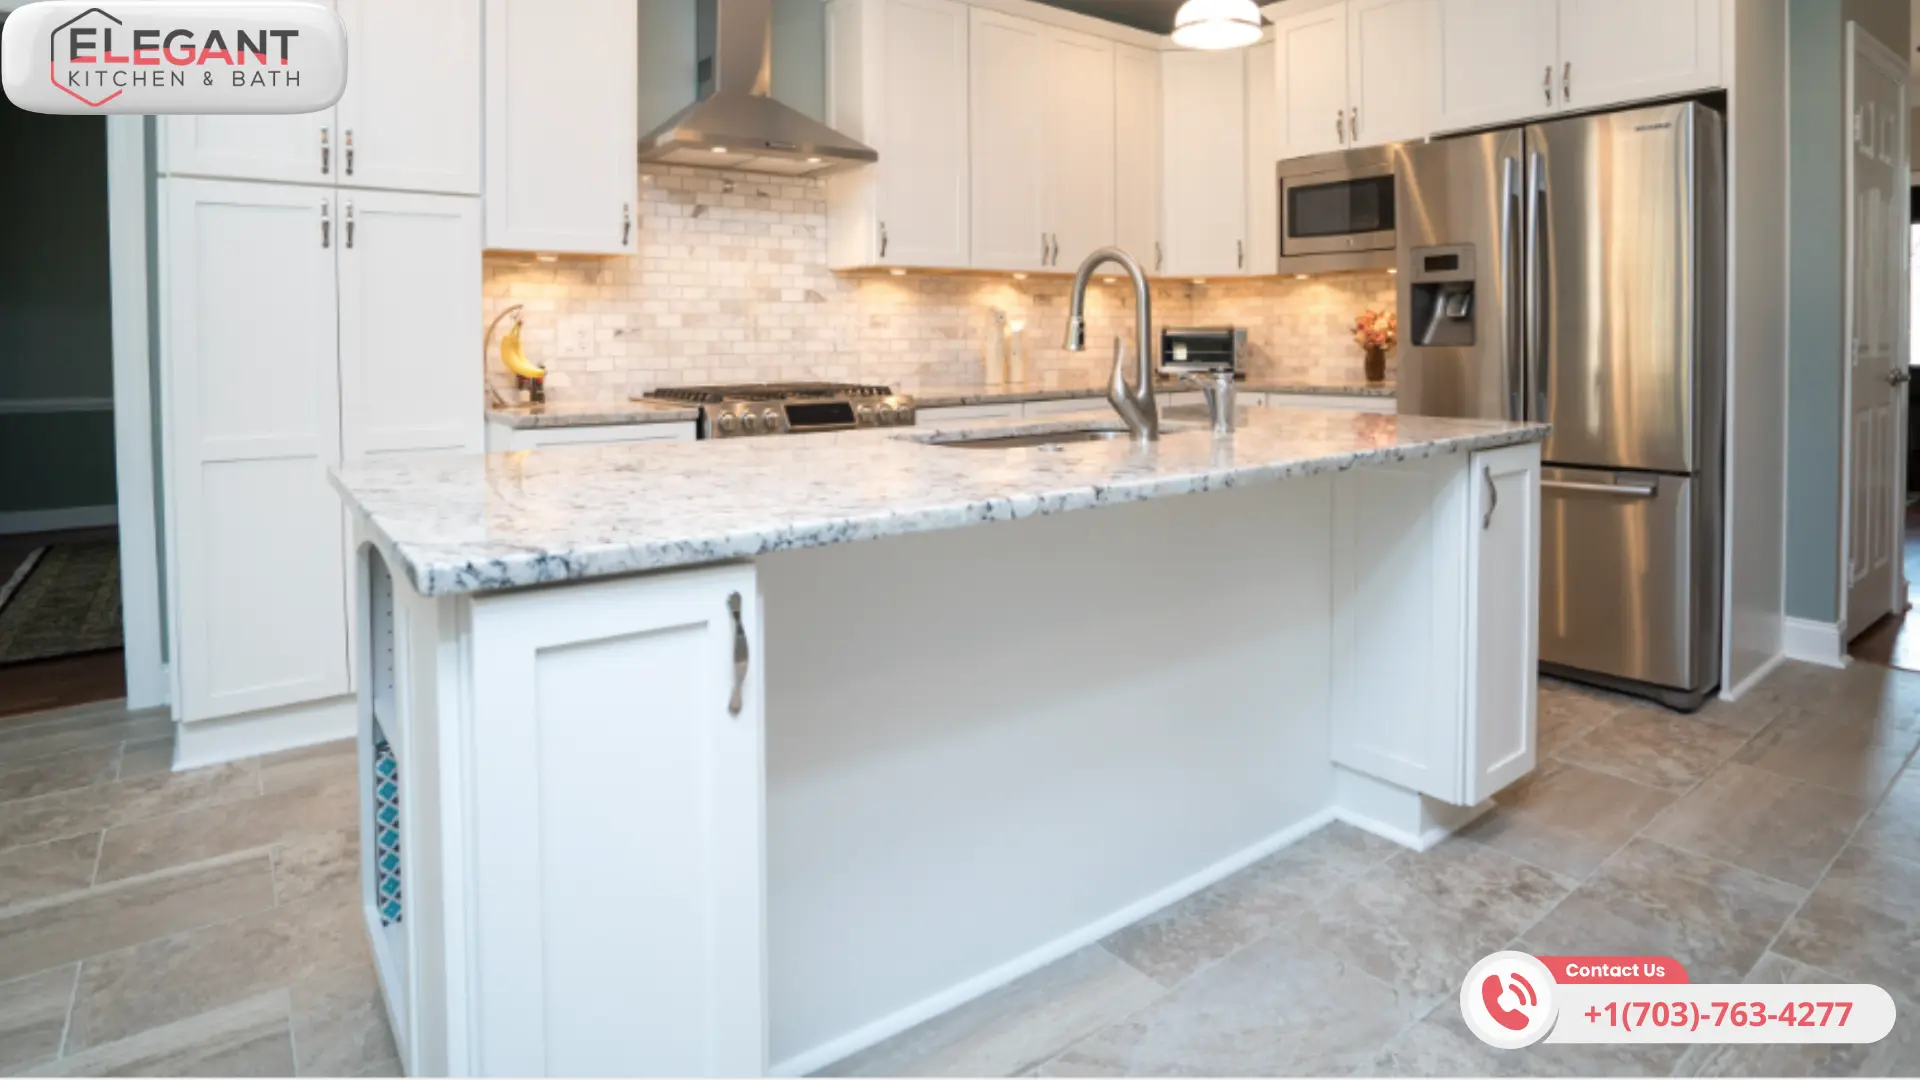 White-kitchen-backsplash-in-kitchen-remodeling-with-elegant-kitchen-and-bath